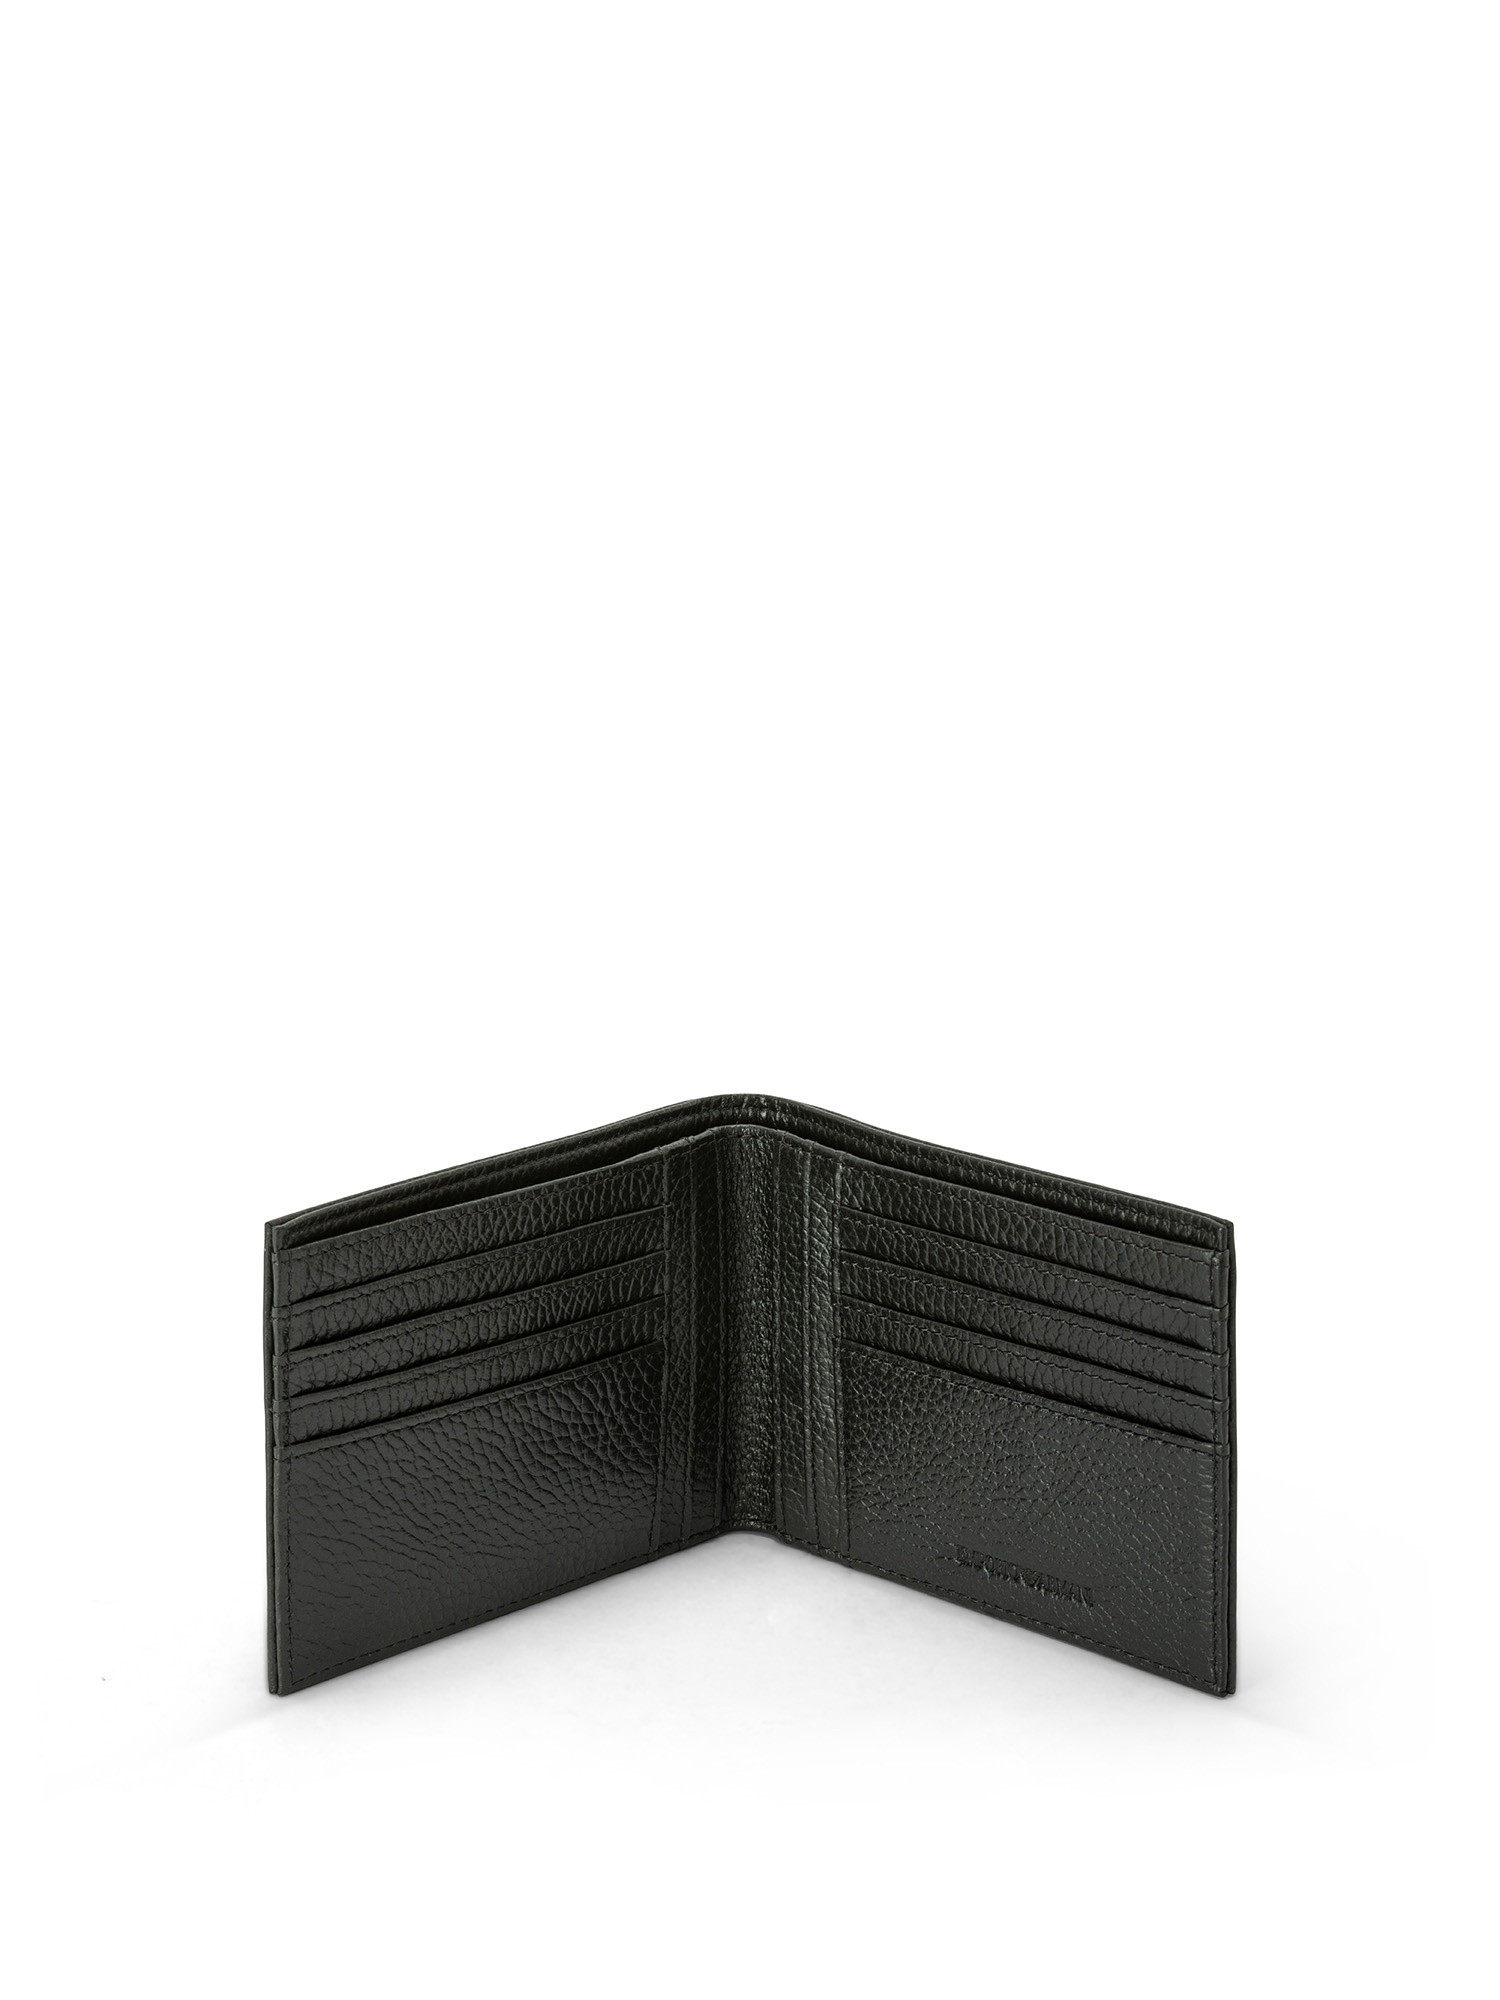 Emporio Armani - Tumbled leather wallet, Black, large image number 2